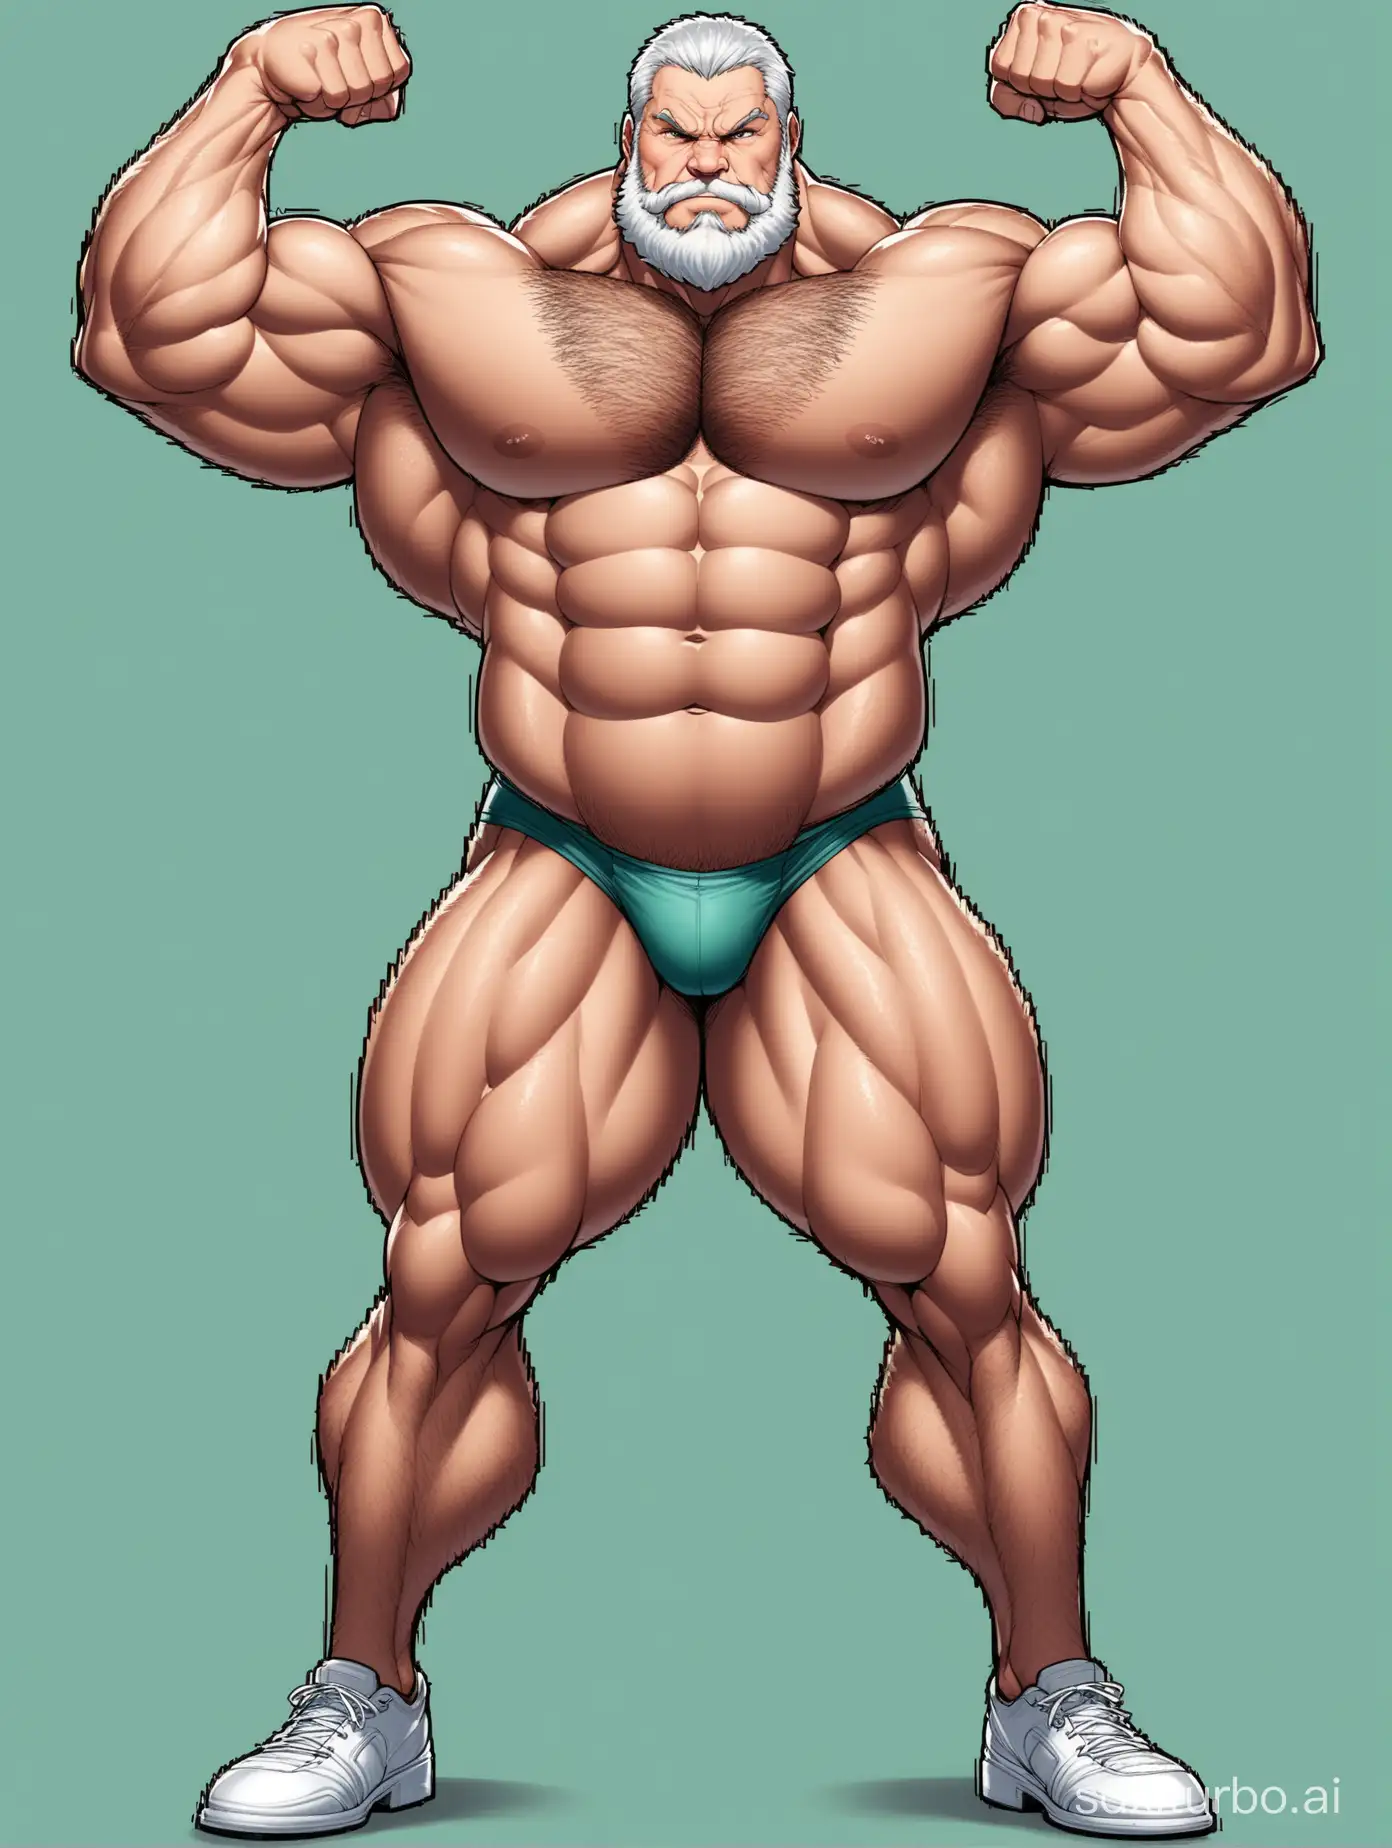 Massive-Muscle-Bodybuilder-Showing-Off-Huge-Biceps-in-White-Underwear